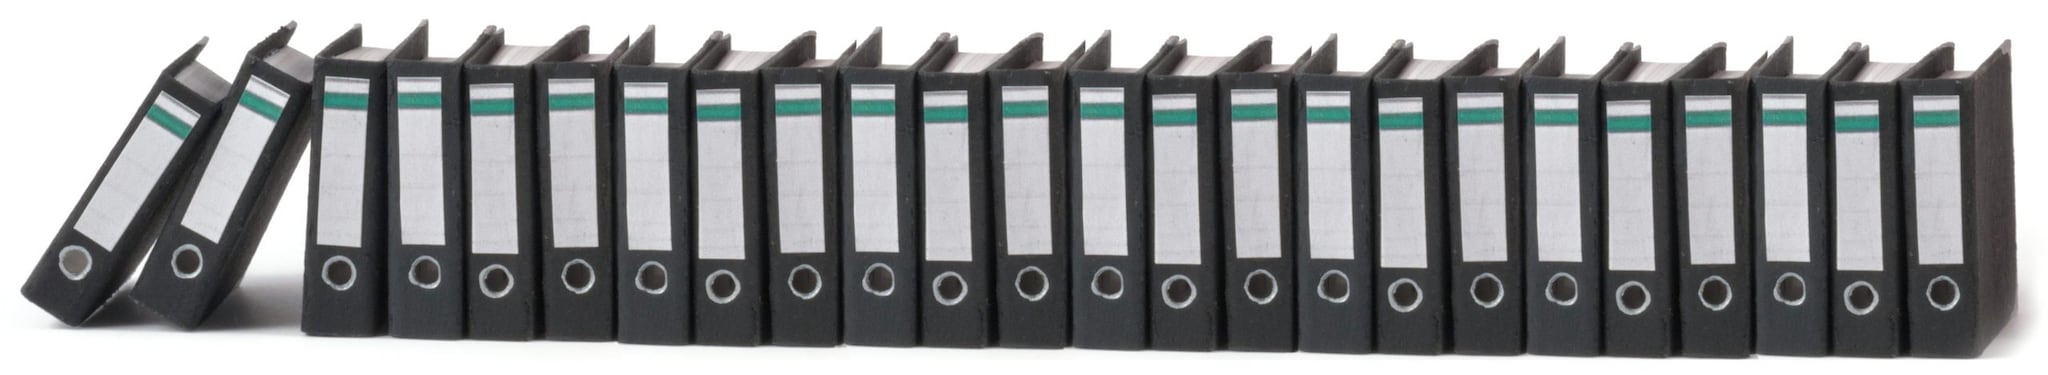 Long row of publication binders